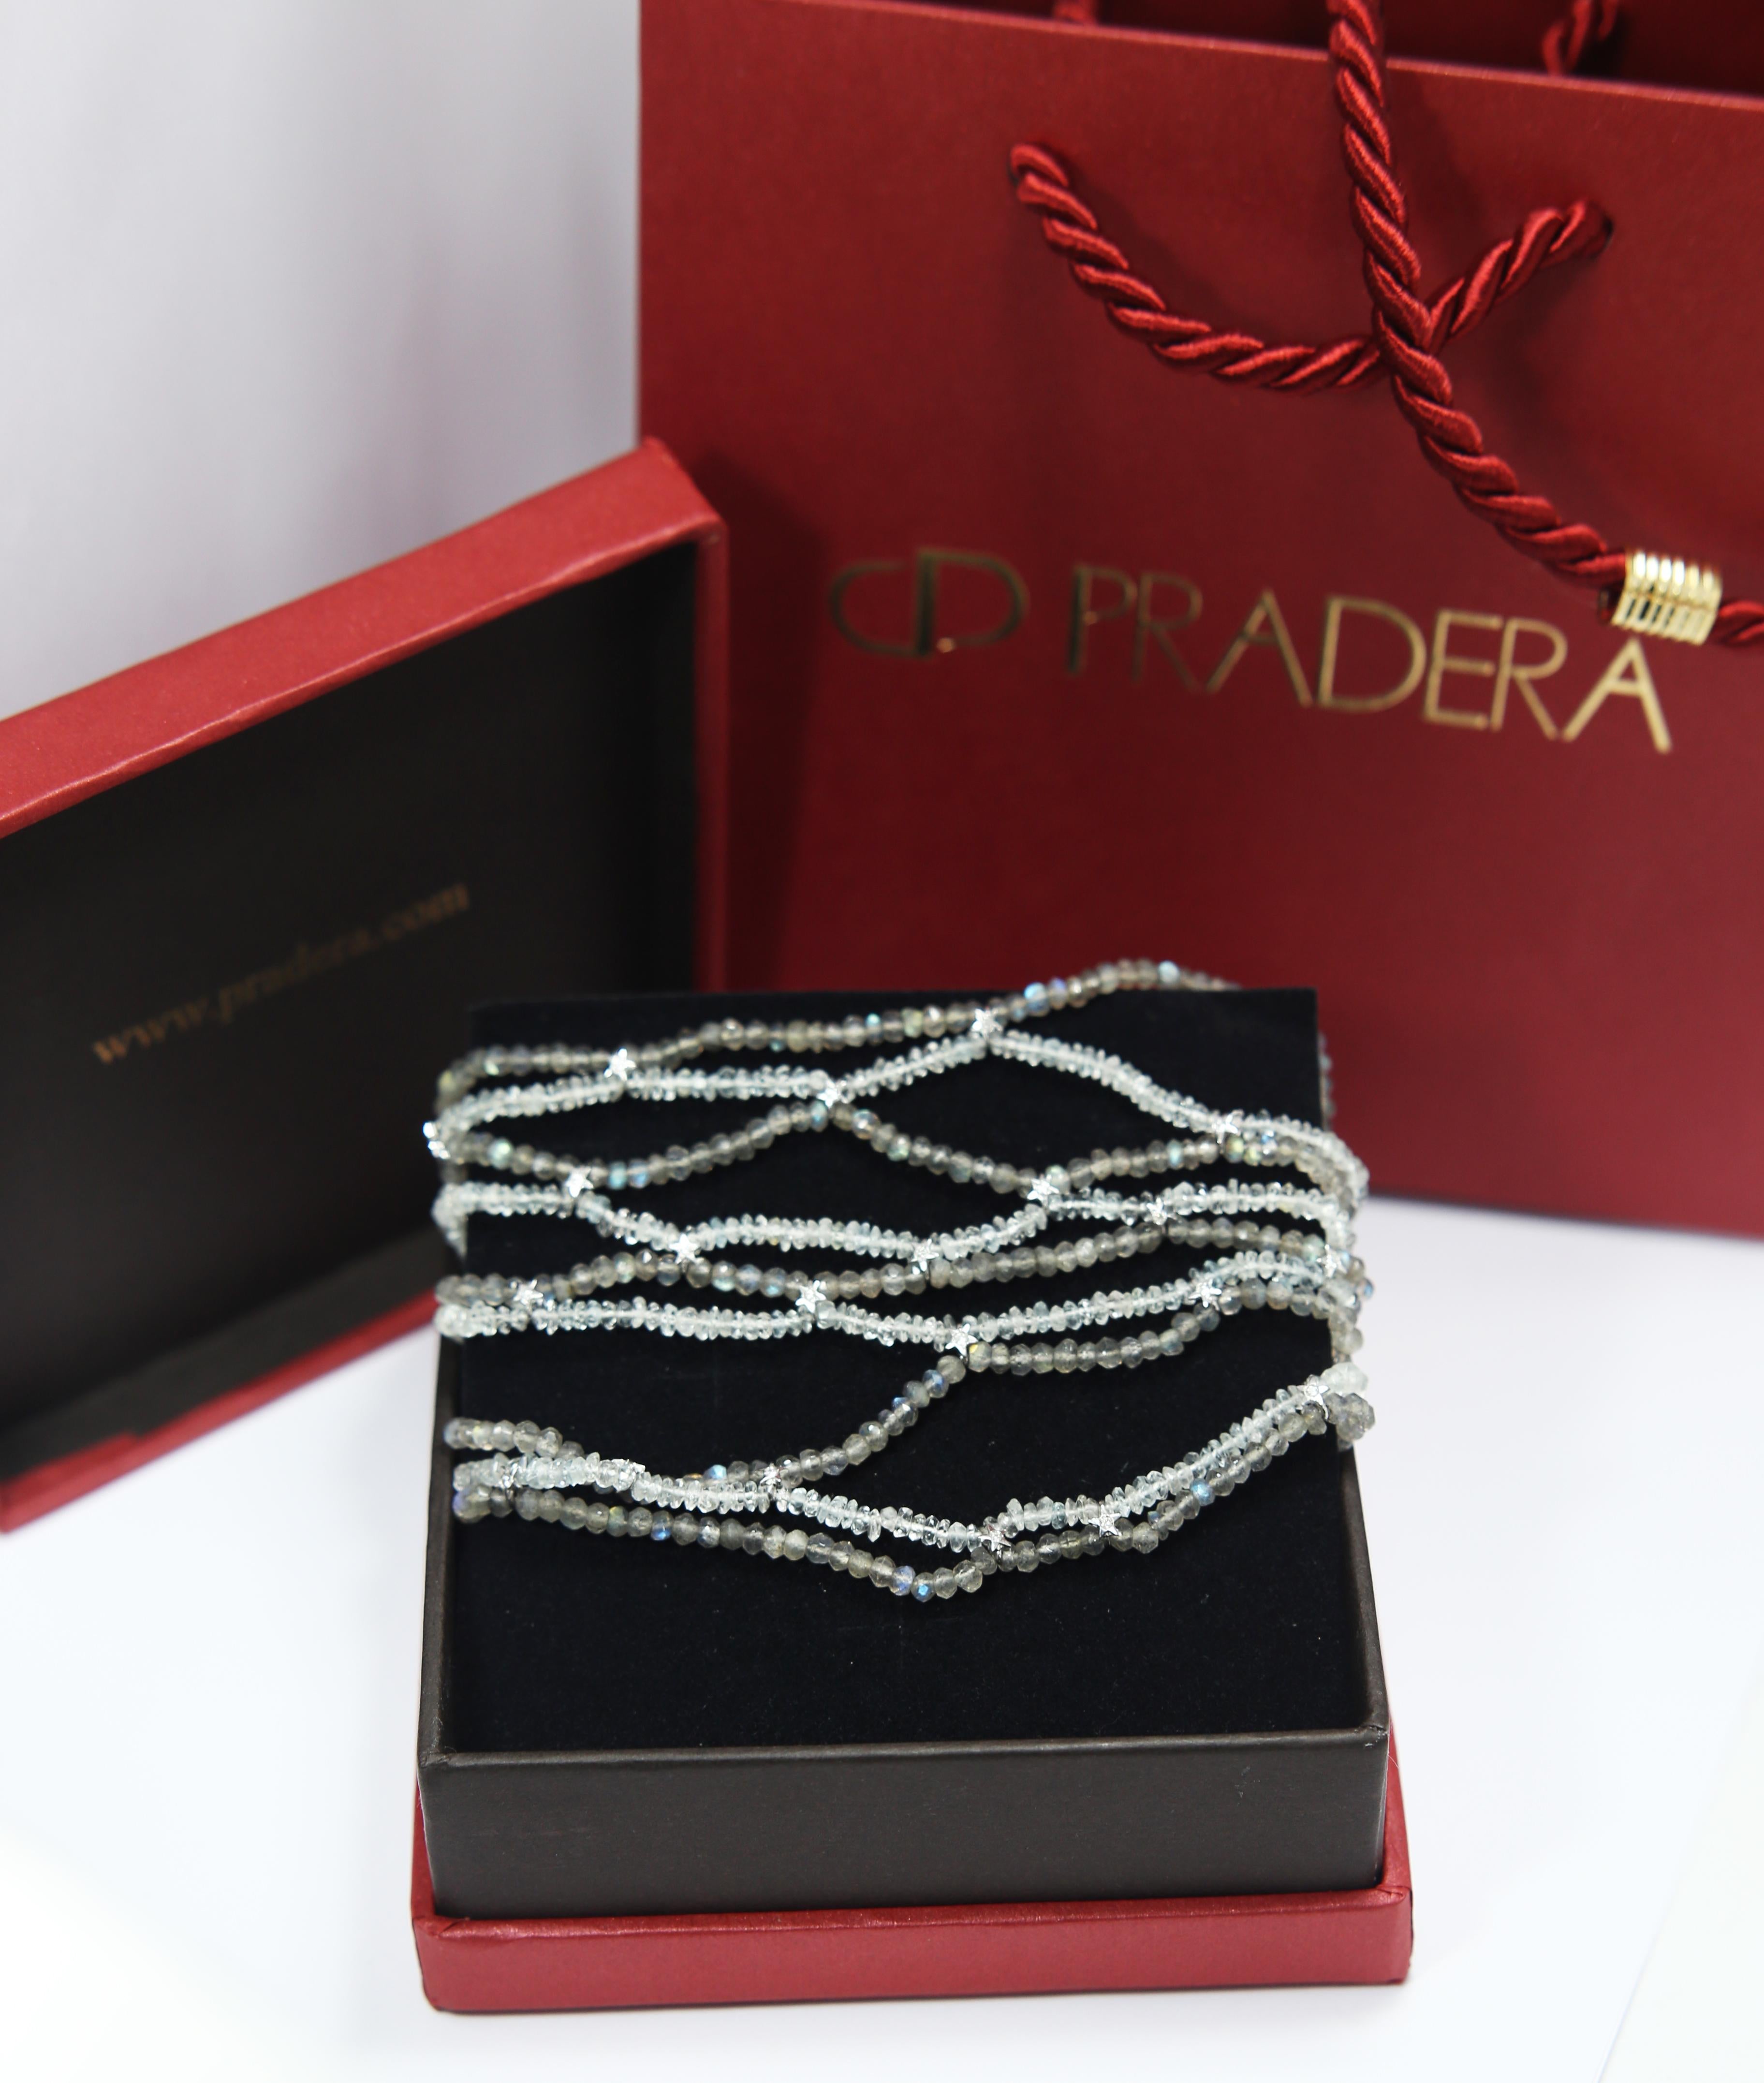 Brilliant Cut Diamond Star Choker Necklace of 18 Karat Gold Labradorite and Moonstone Beads